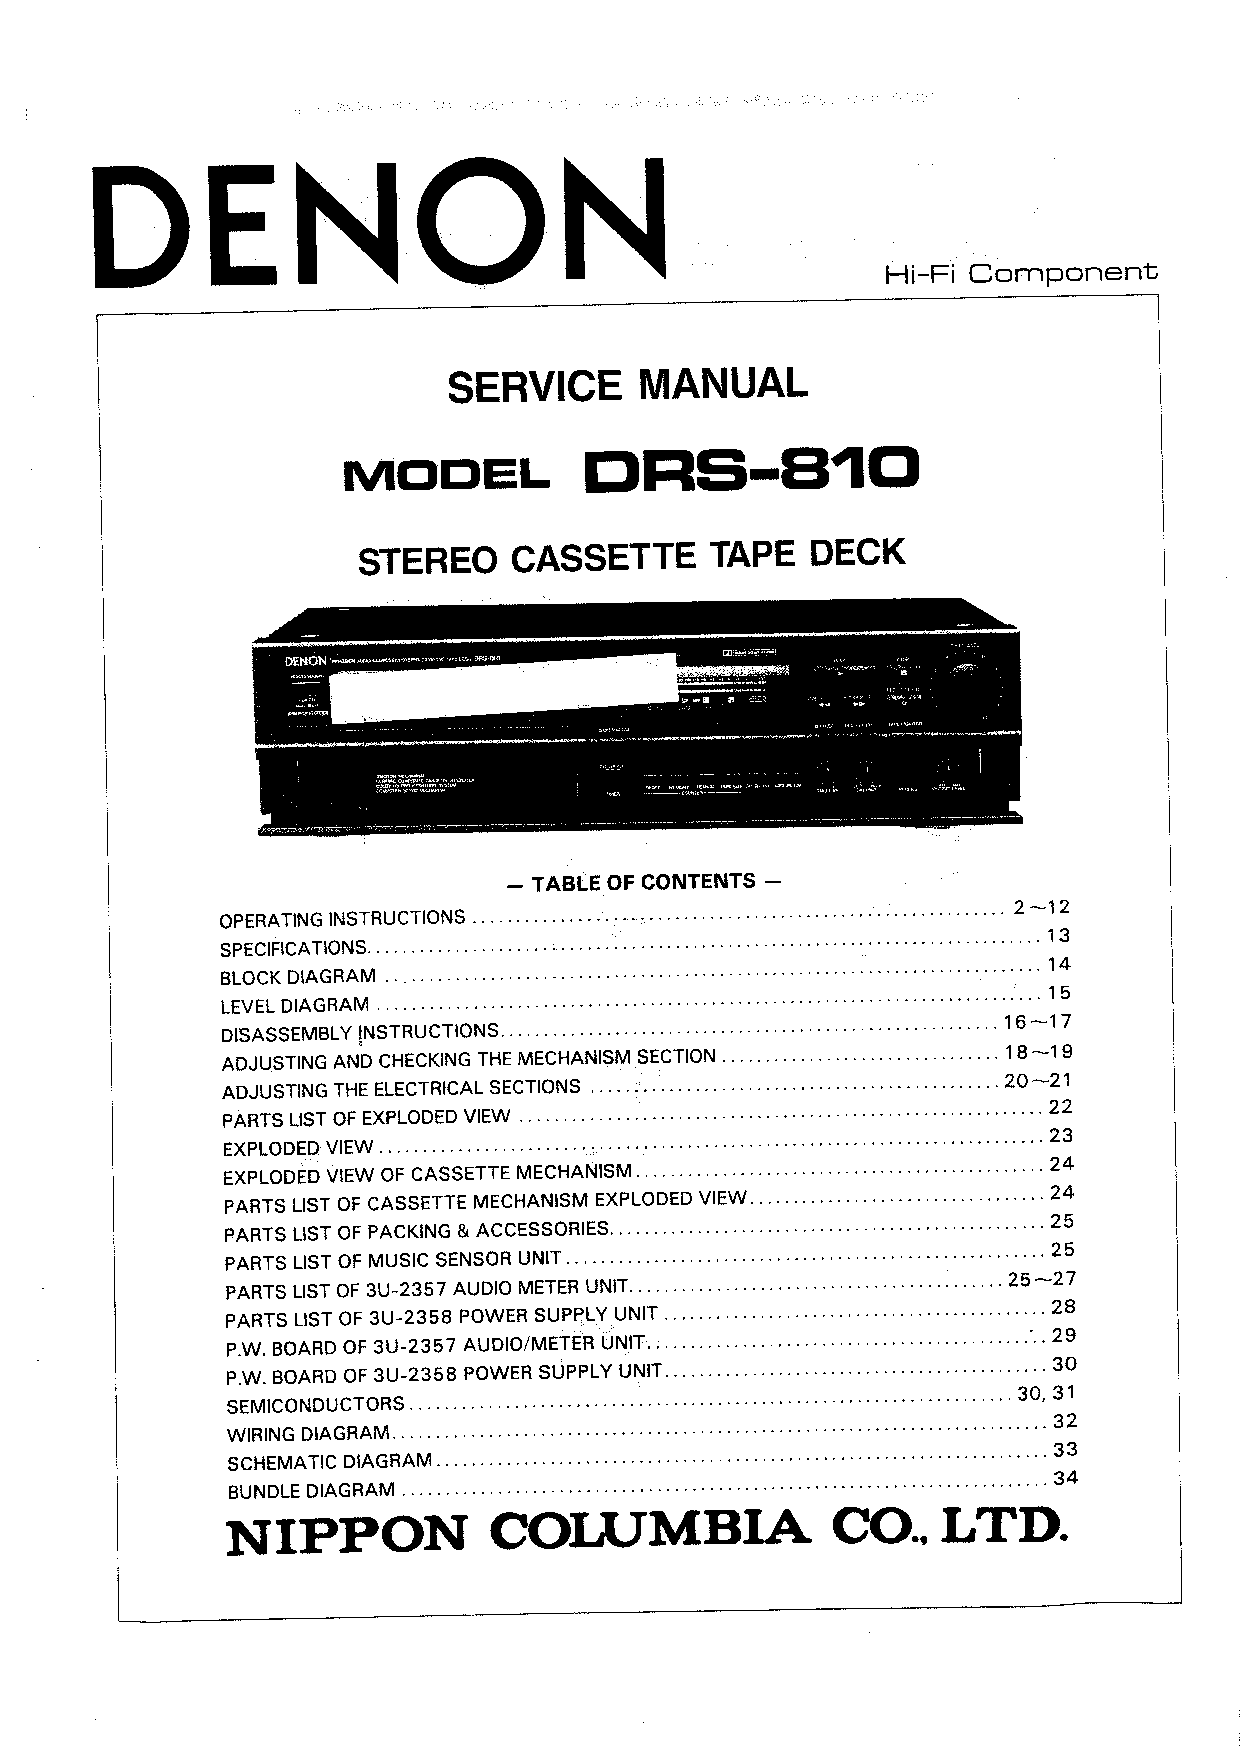 Denon DRS-810 Service Manual